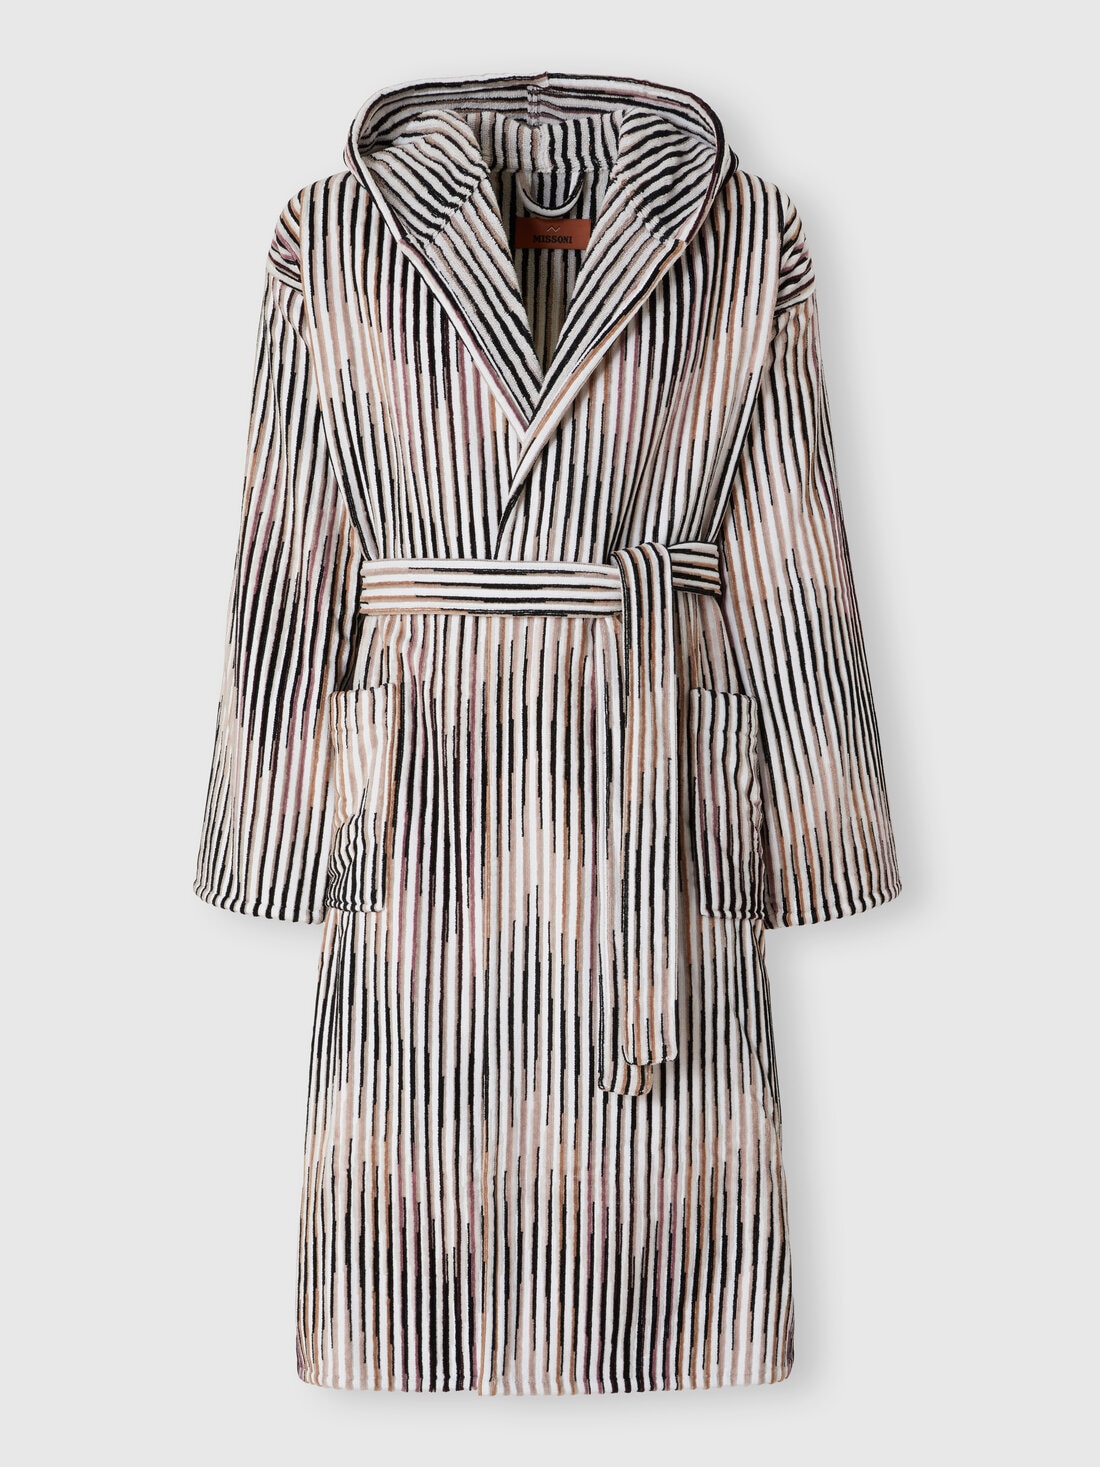 Arpeggio bathrobe in slub cotton terry, Brown - 1D3AC99707381 - 0